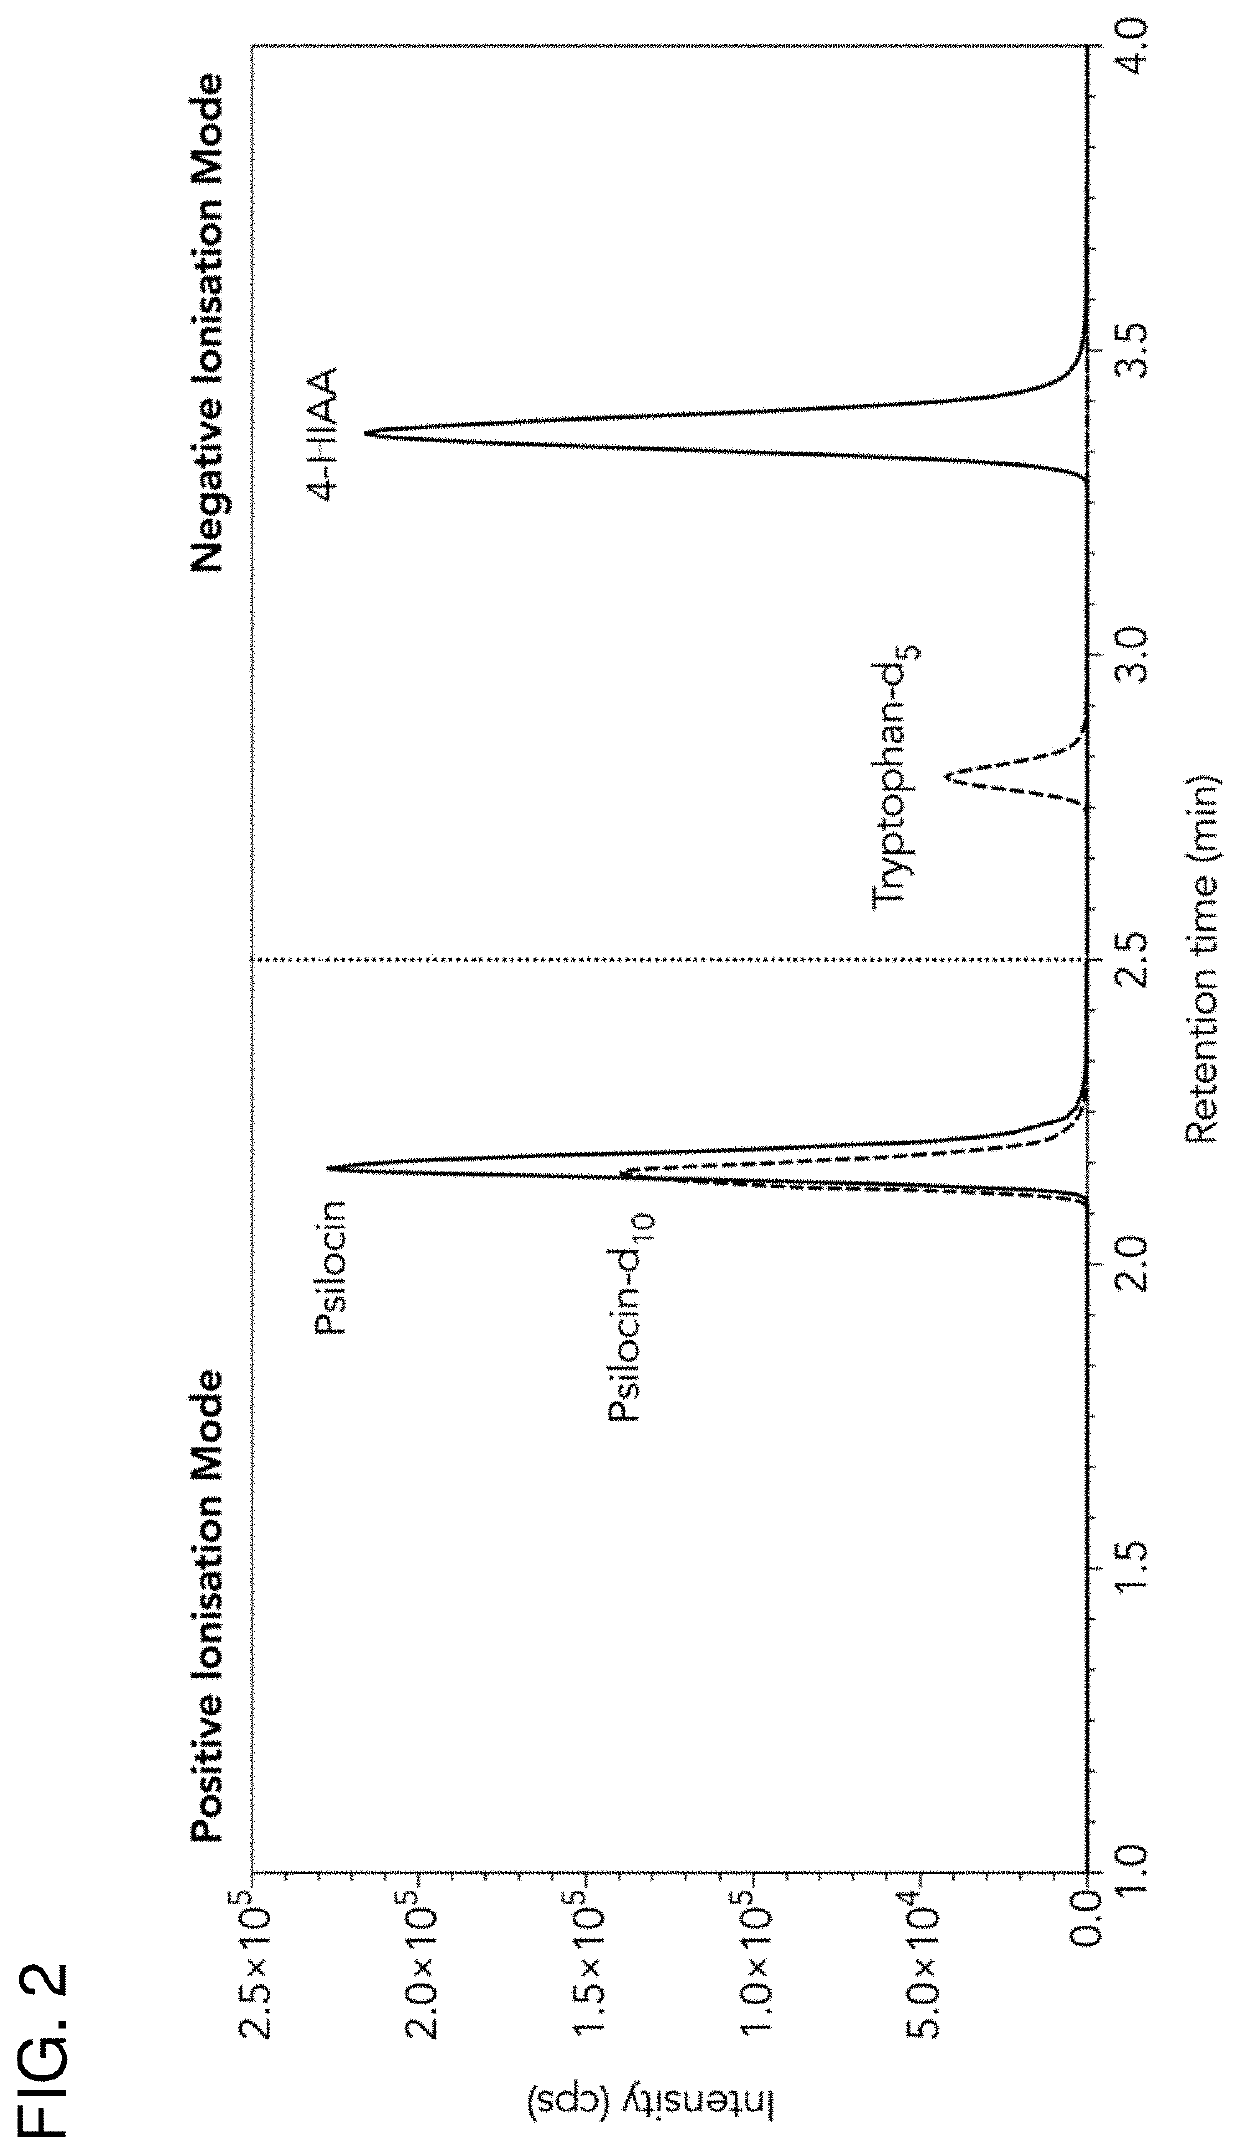 Method of quantifying psilocybin's main metabolites, psilocin and 4-hydroxyindole-3-acetic acid, in human plasma